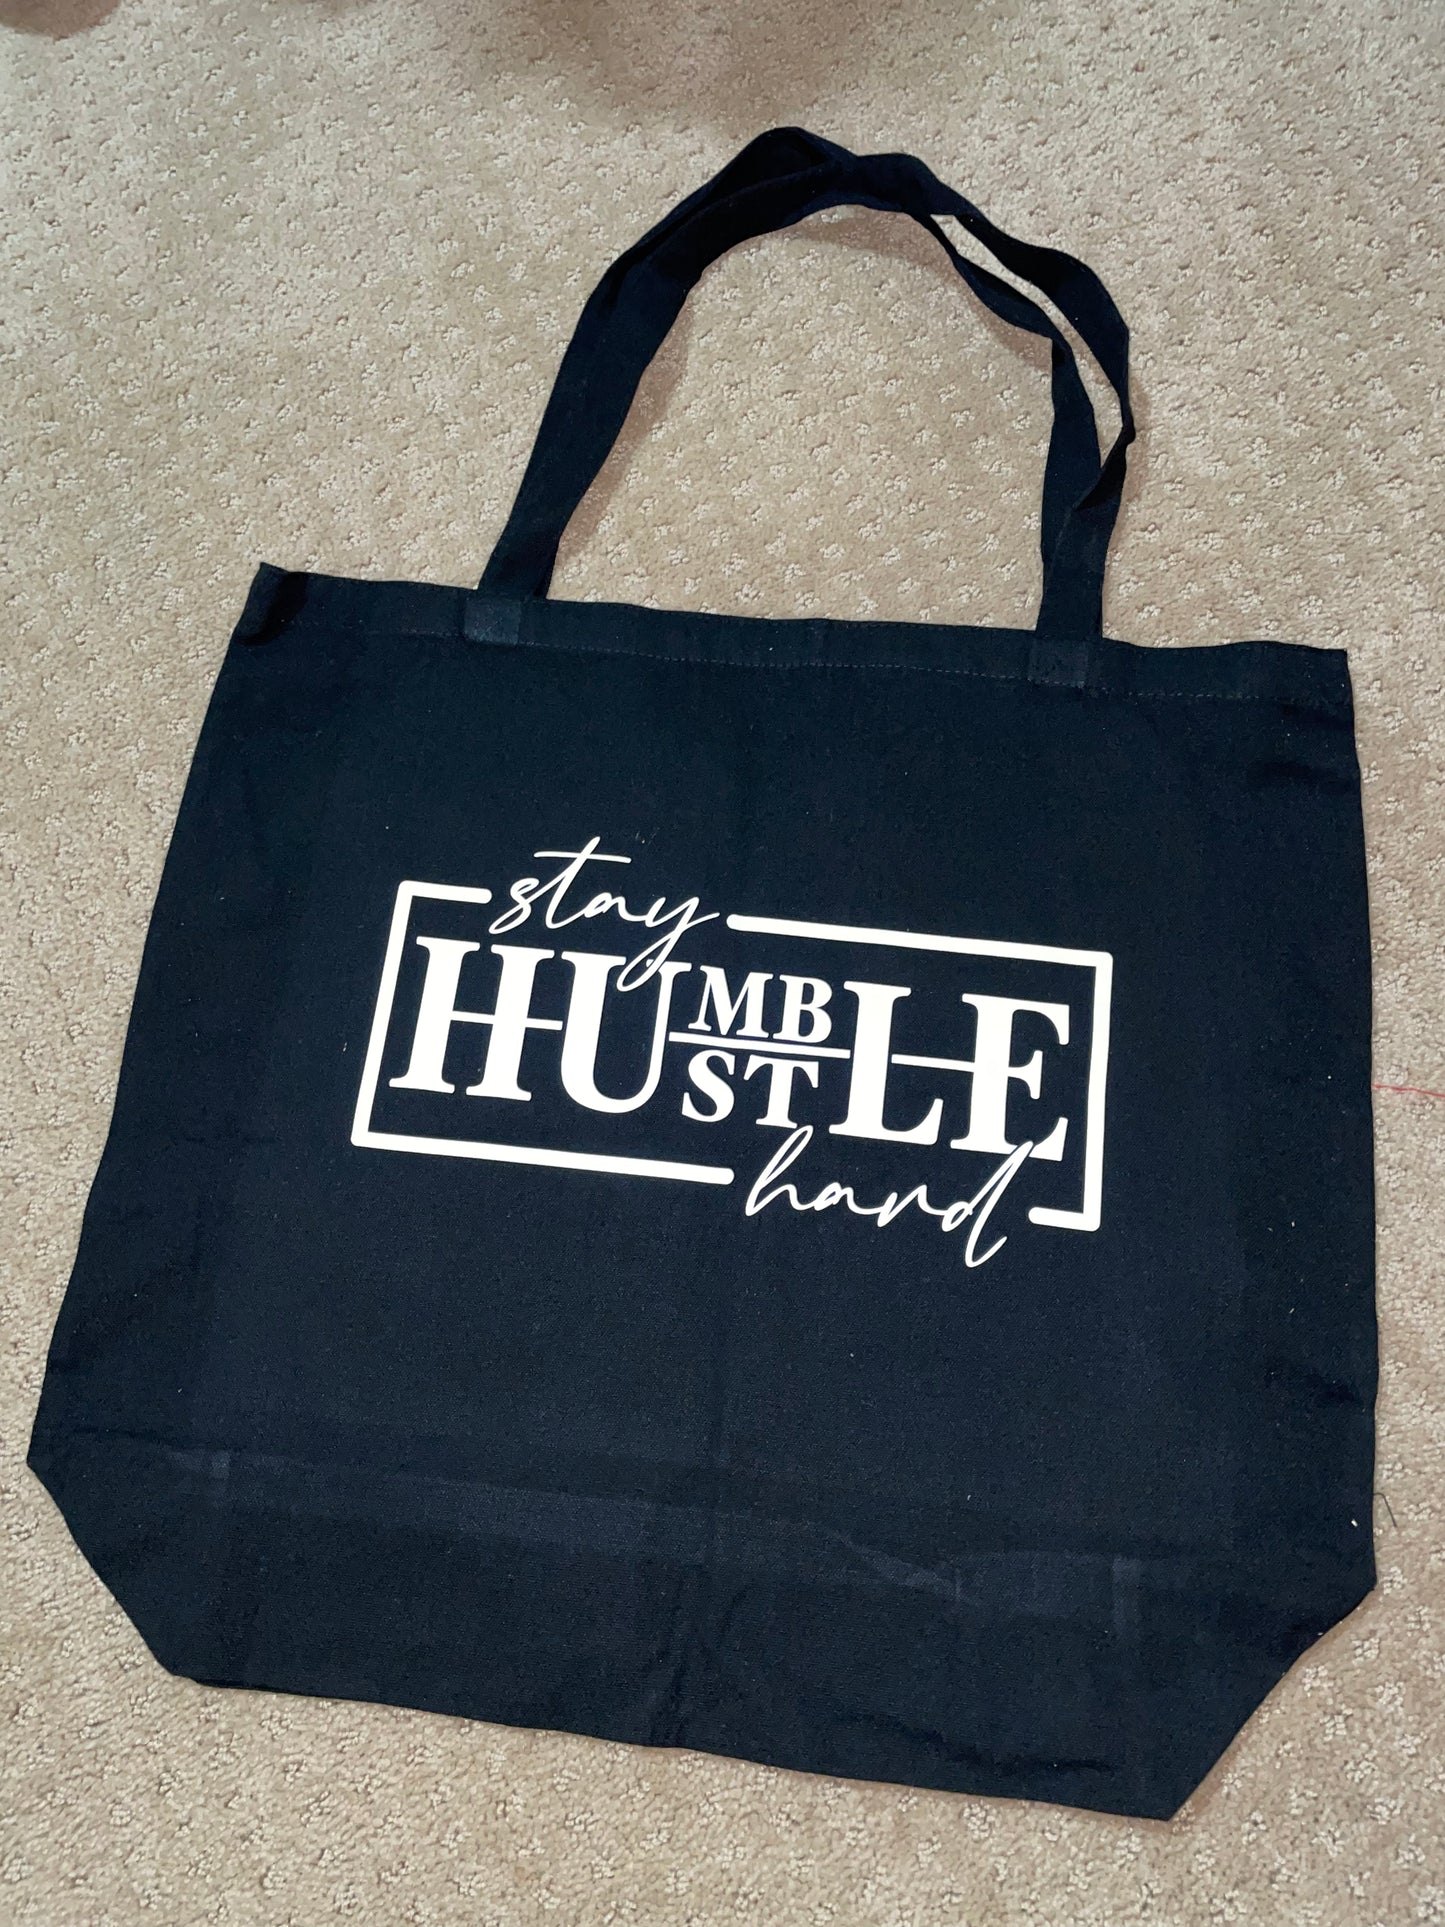 Stay Humble Hustle Hard  Bag